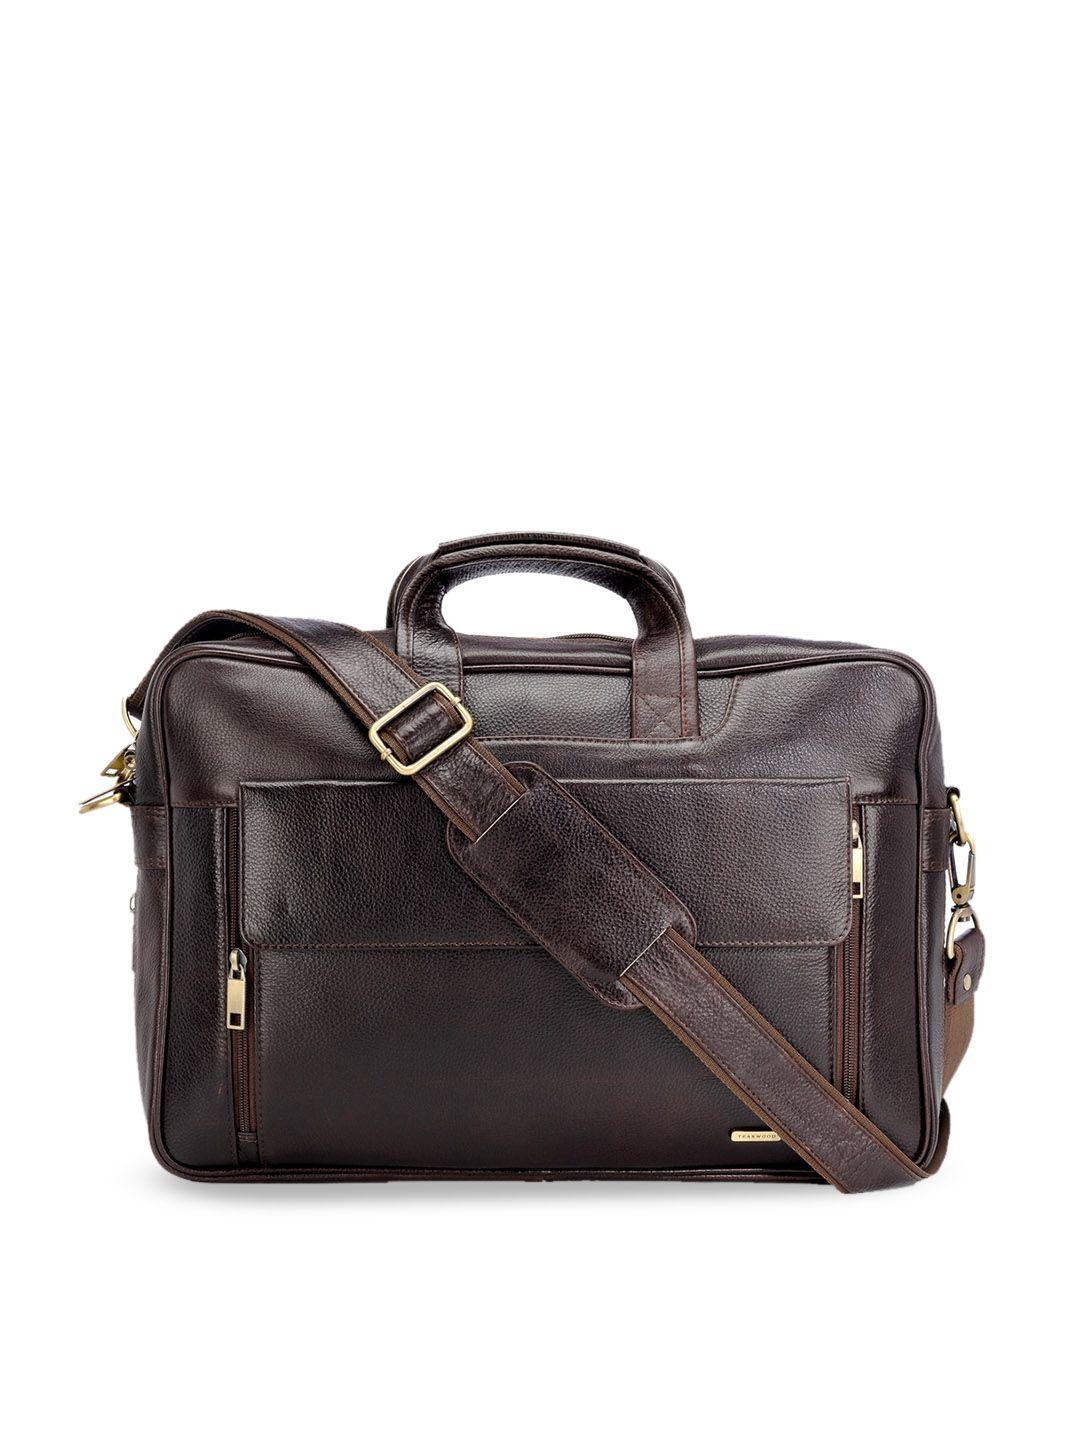 teakwood leathers unisex brown solid leather laptop bag